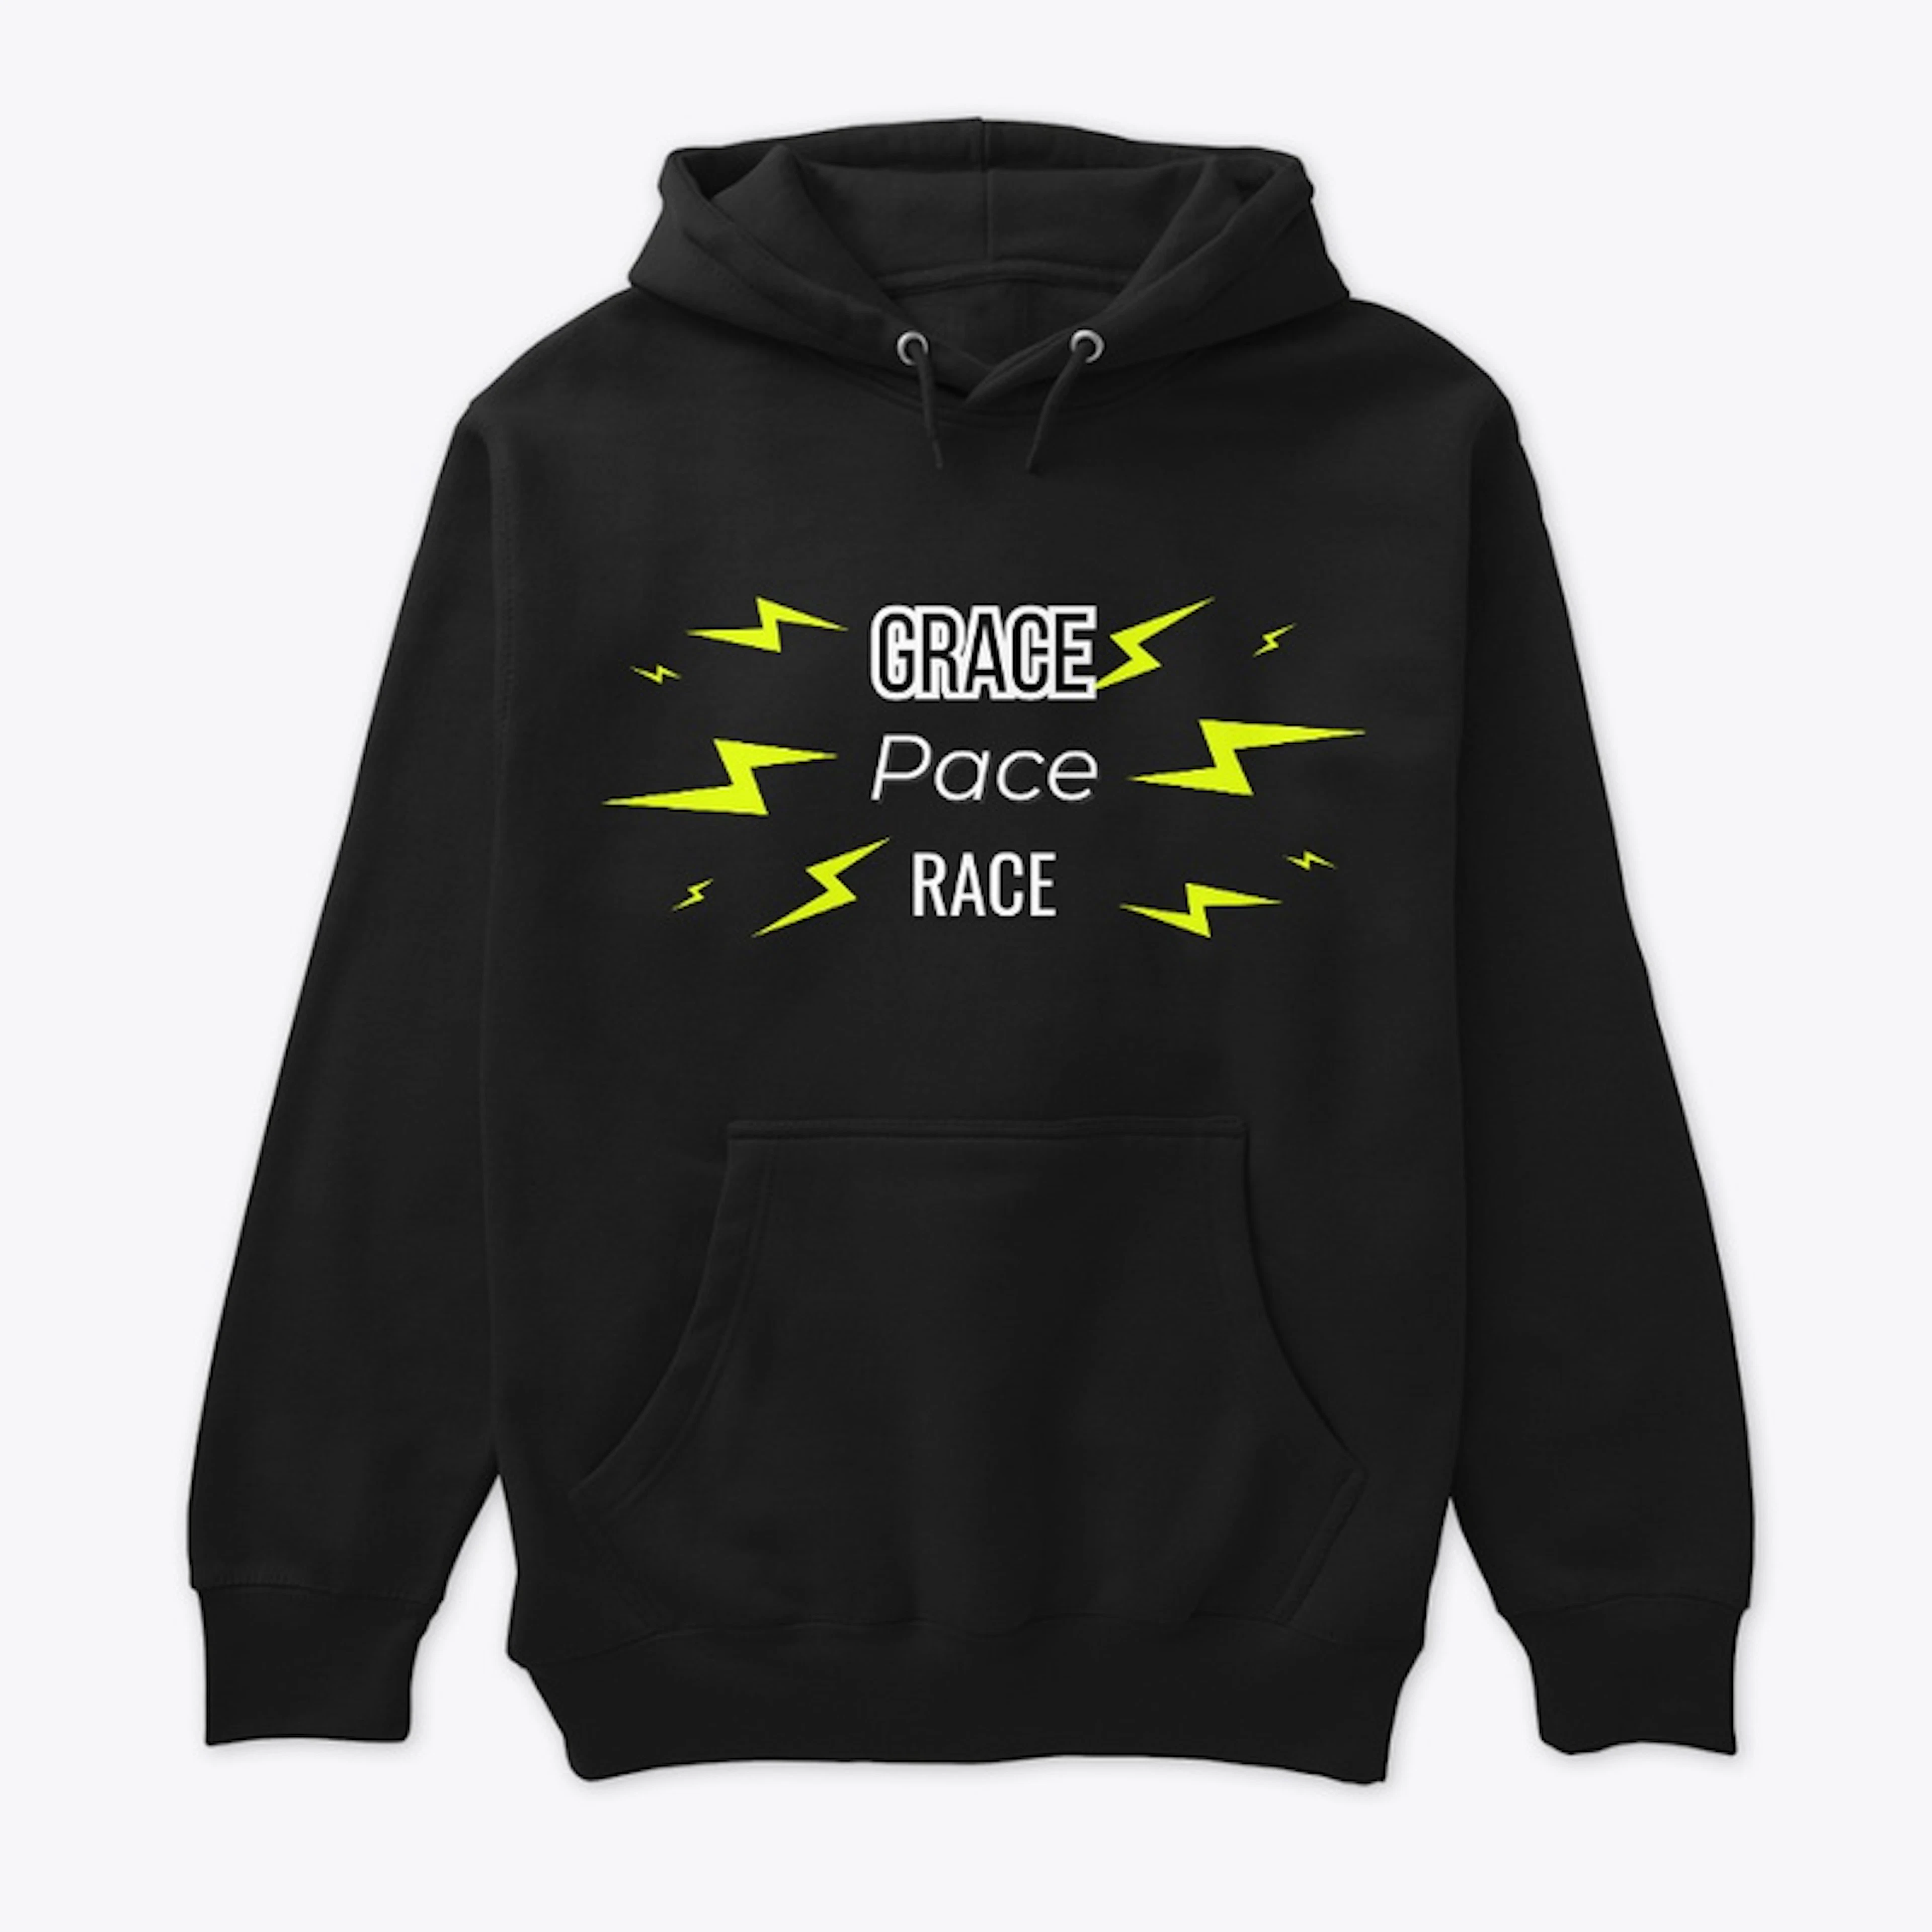 Grace, Pace, Race Collection